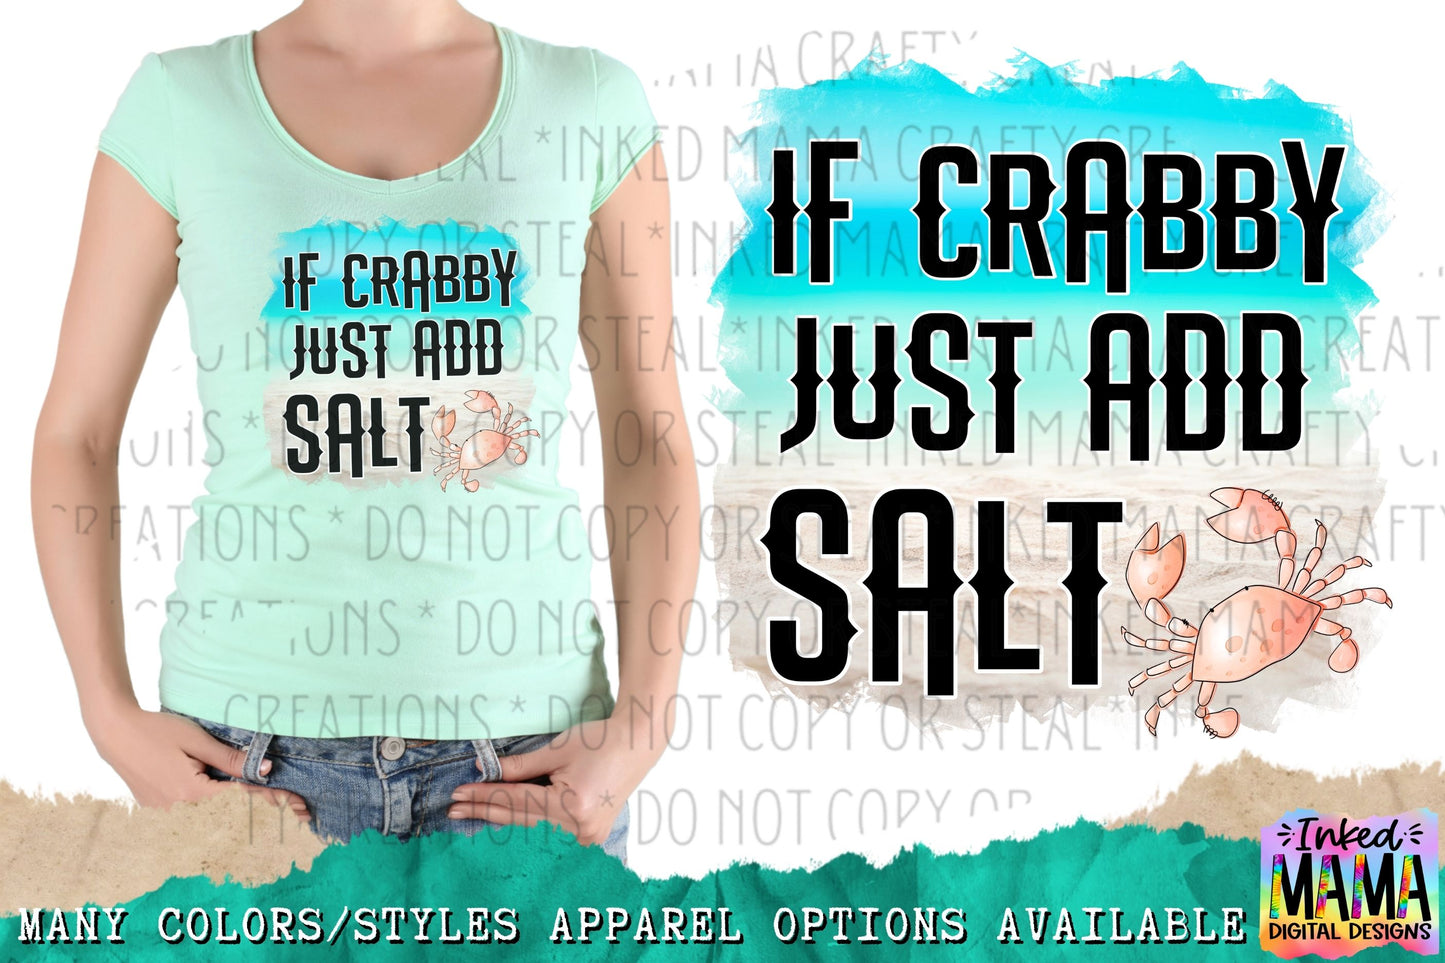 If crabby just add salt - Apparel